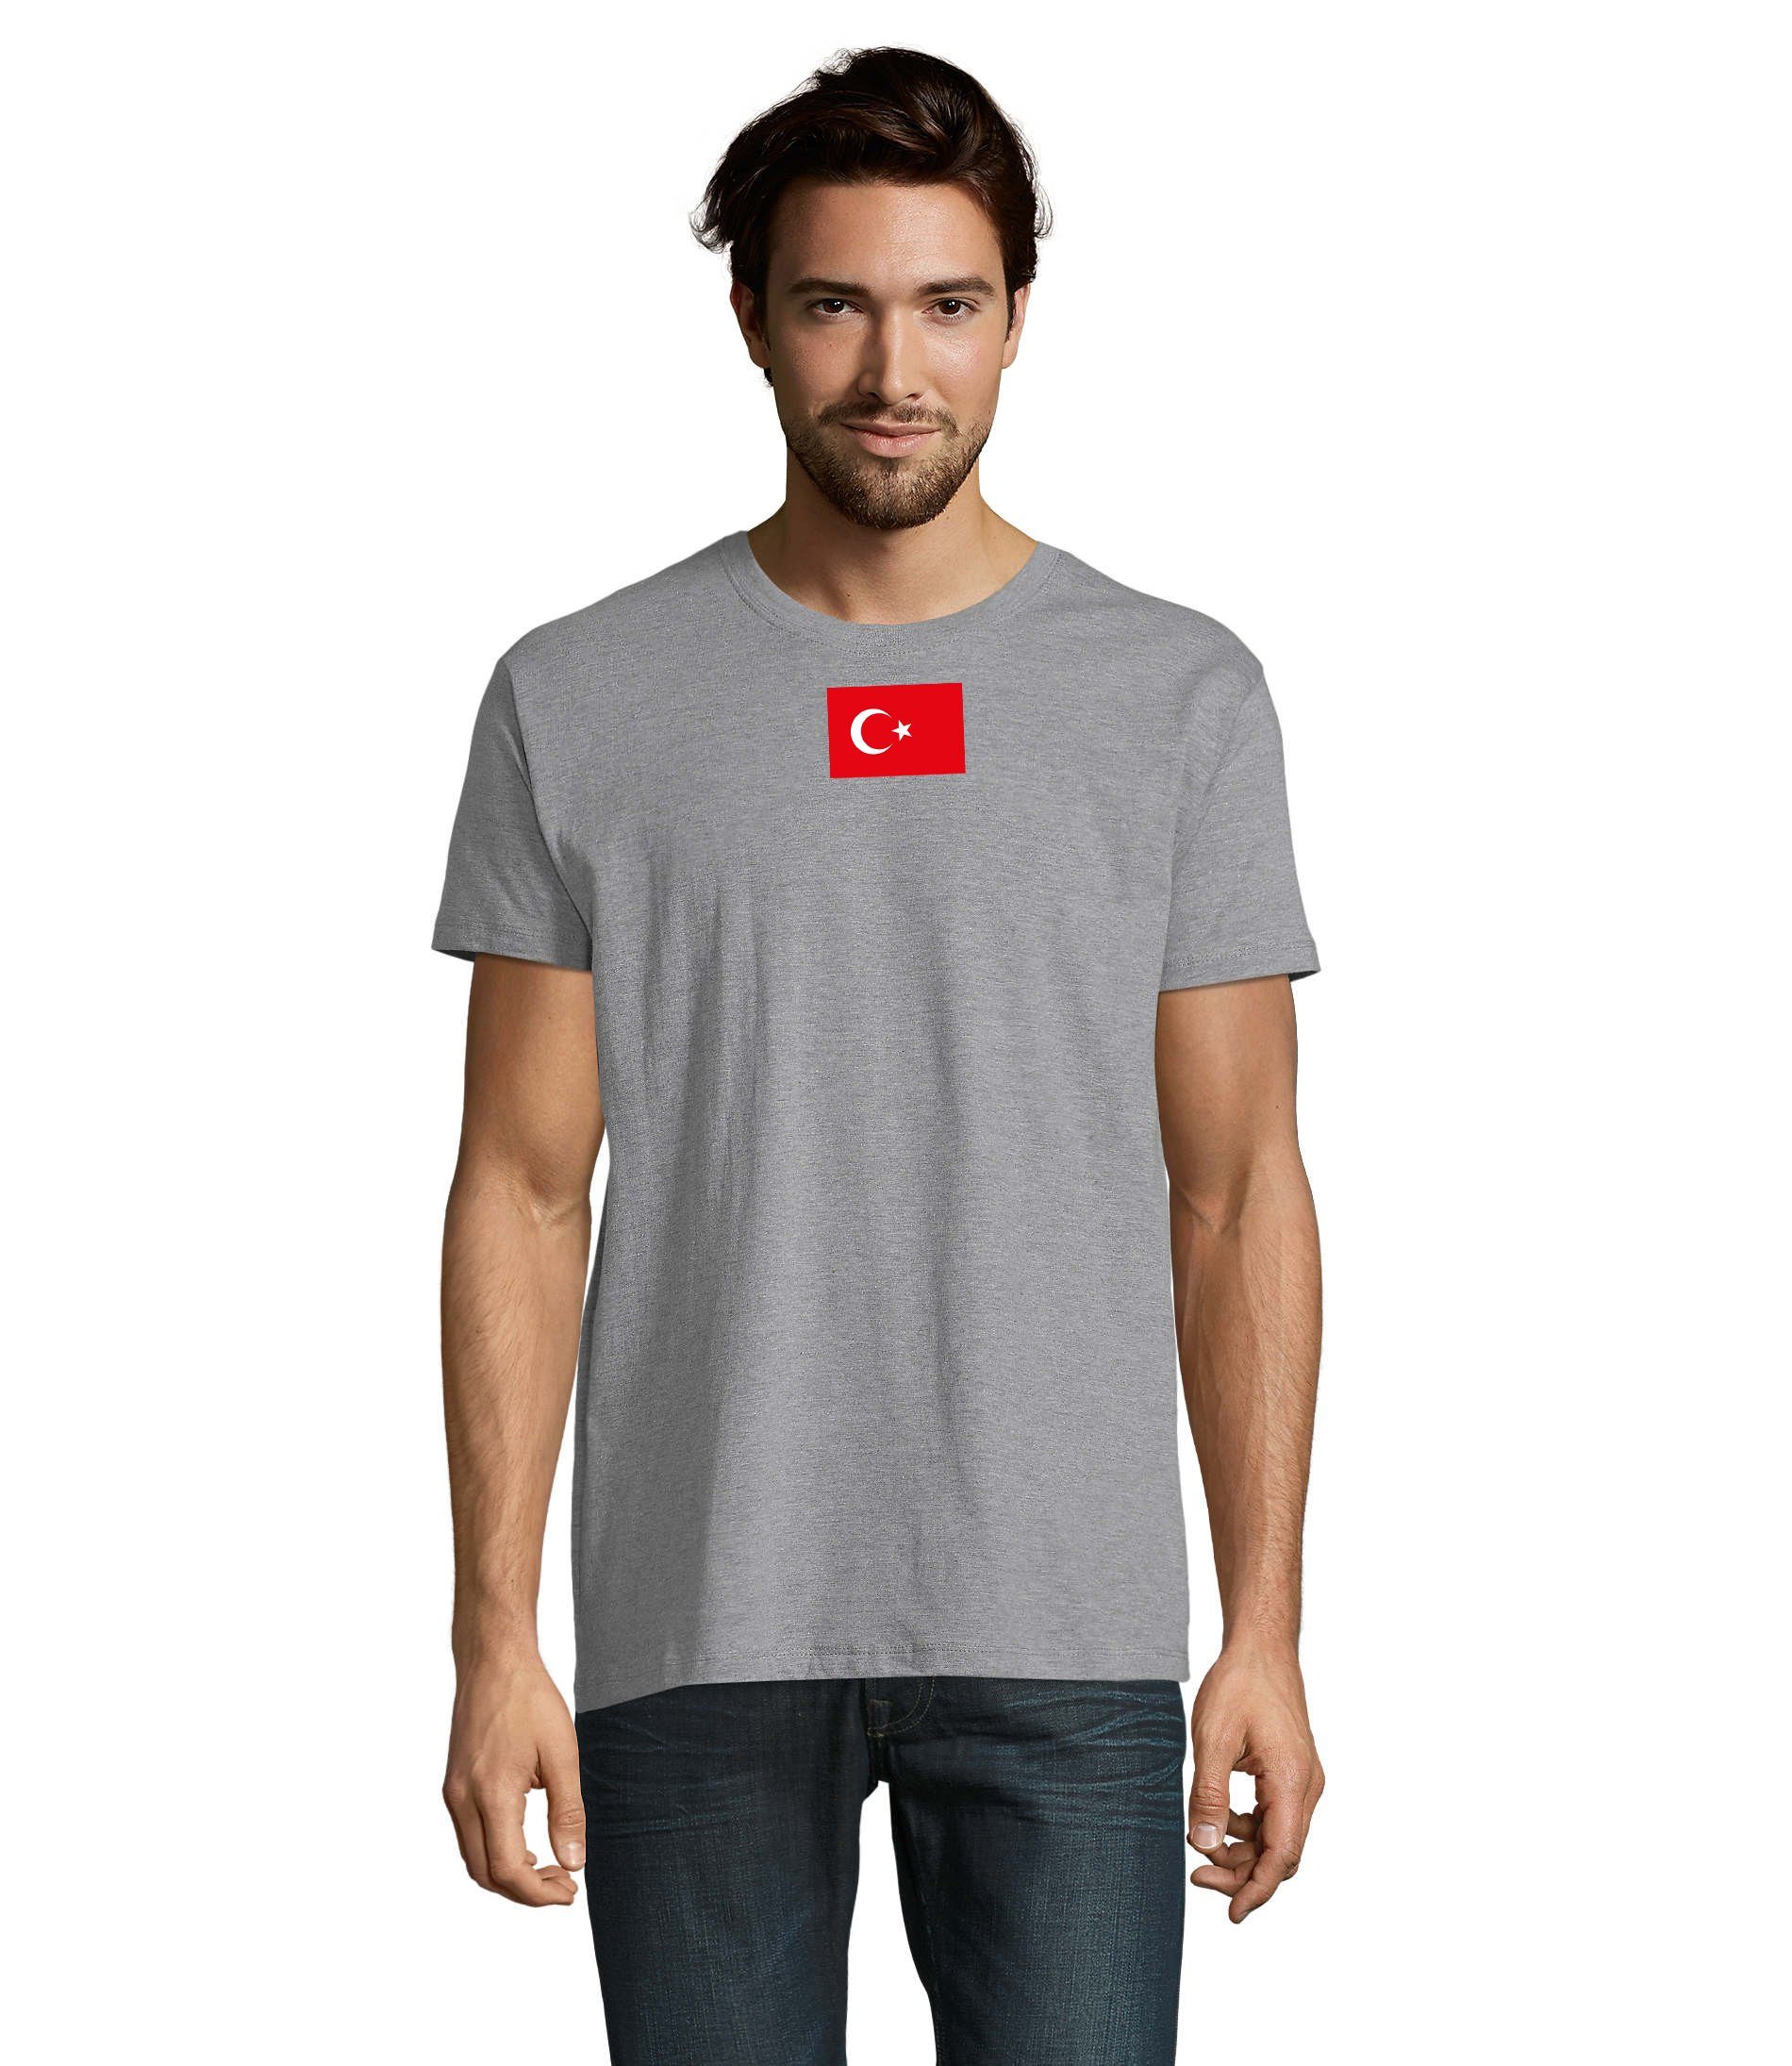 Blondie & Brownie T-Shirt Herren Türkei Turkey Ukraine USA Army Armee Nato Peace Air Force Grau